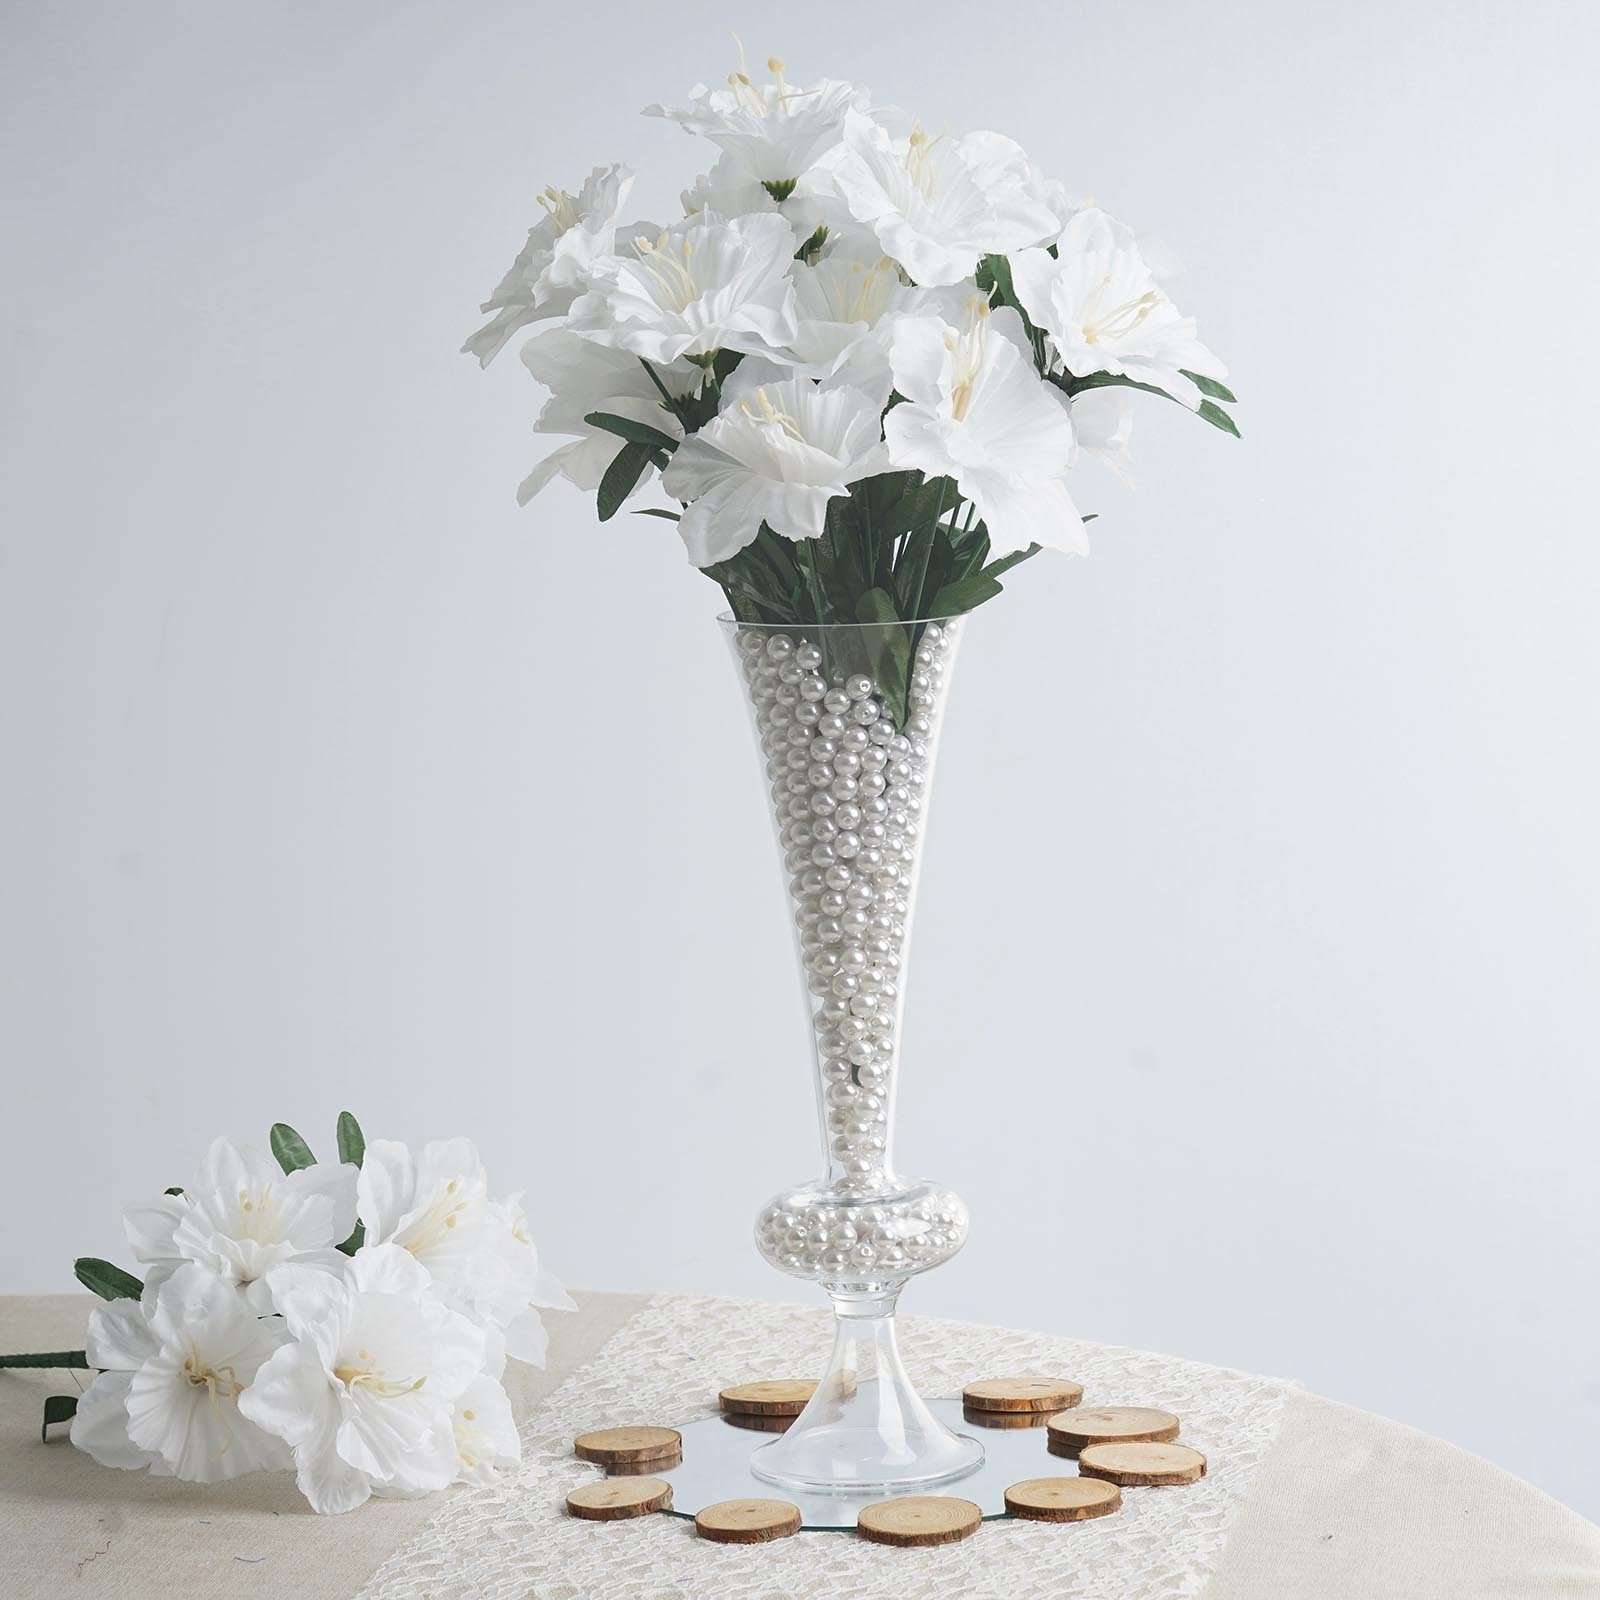 12 Bush 72 Pcs White Artificial Silk Daffodil Flower Bridal Bouquet